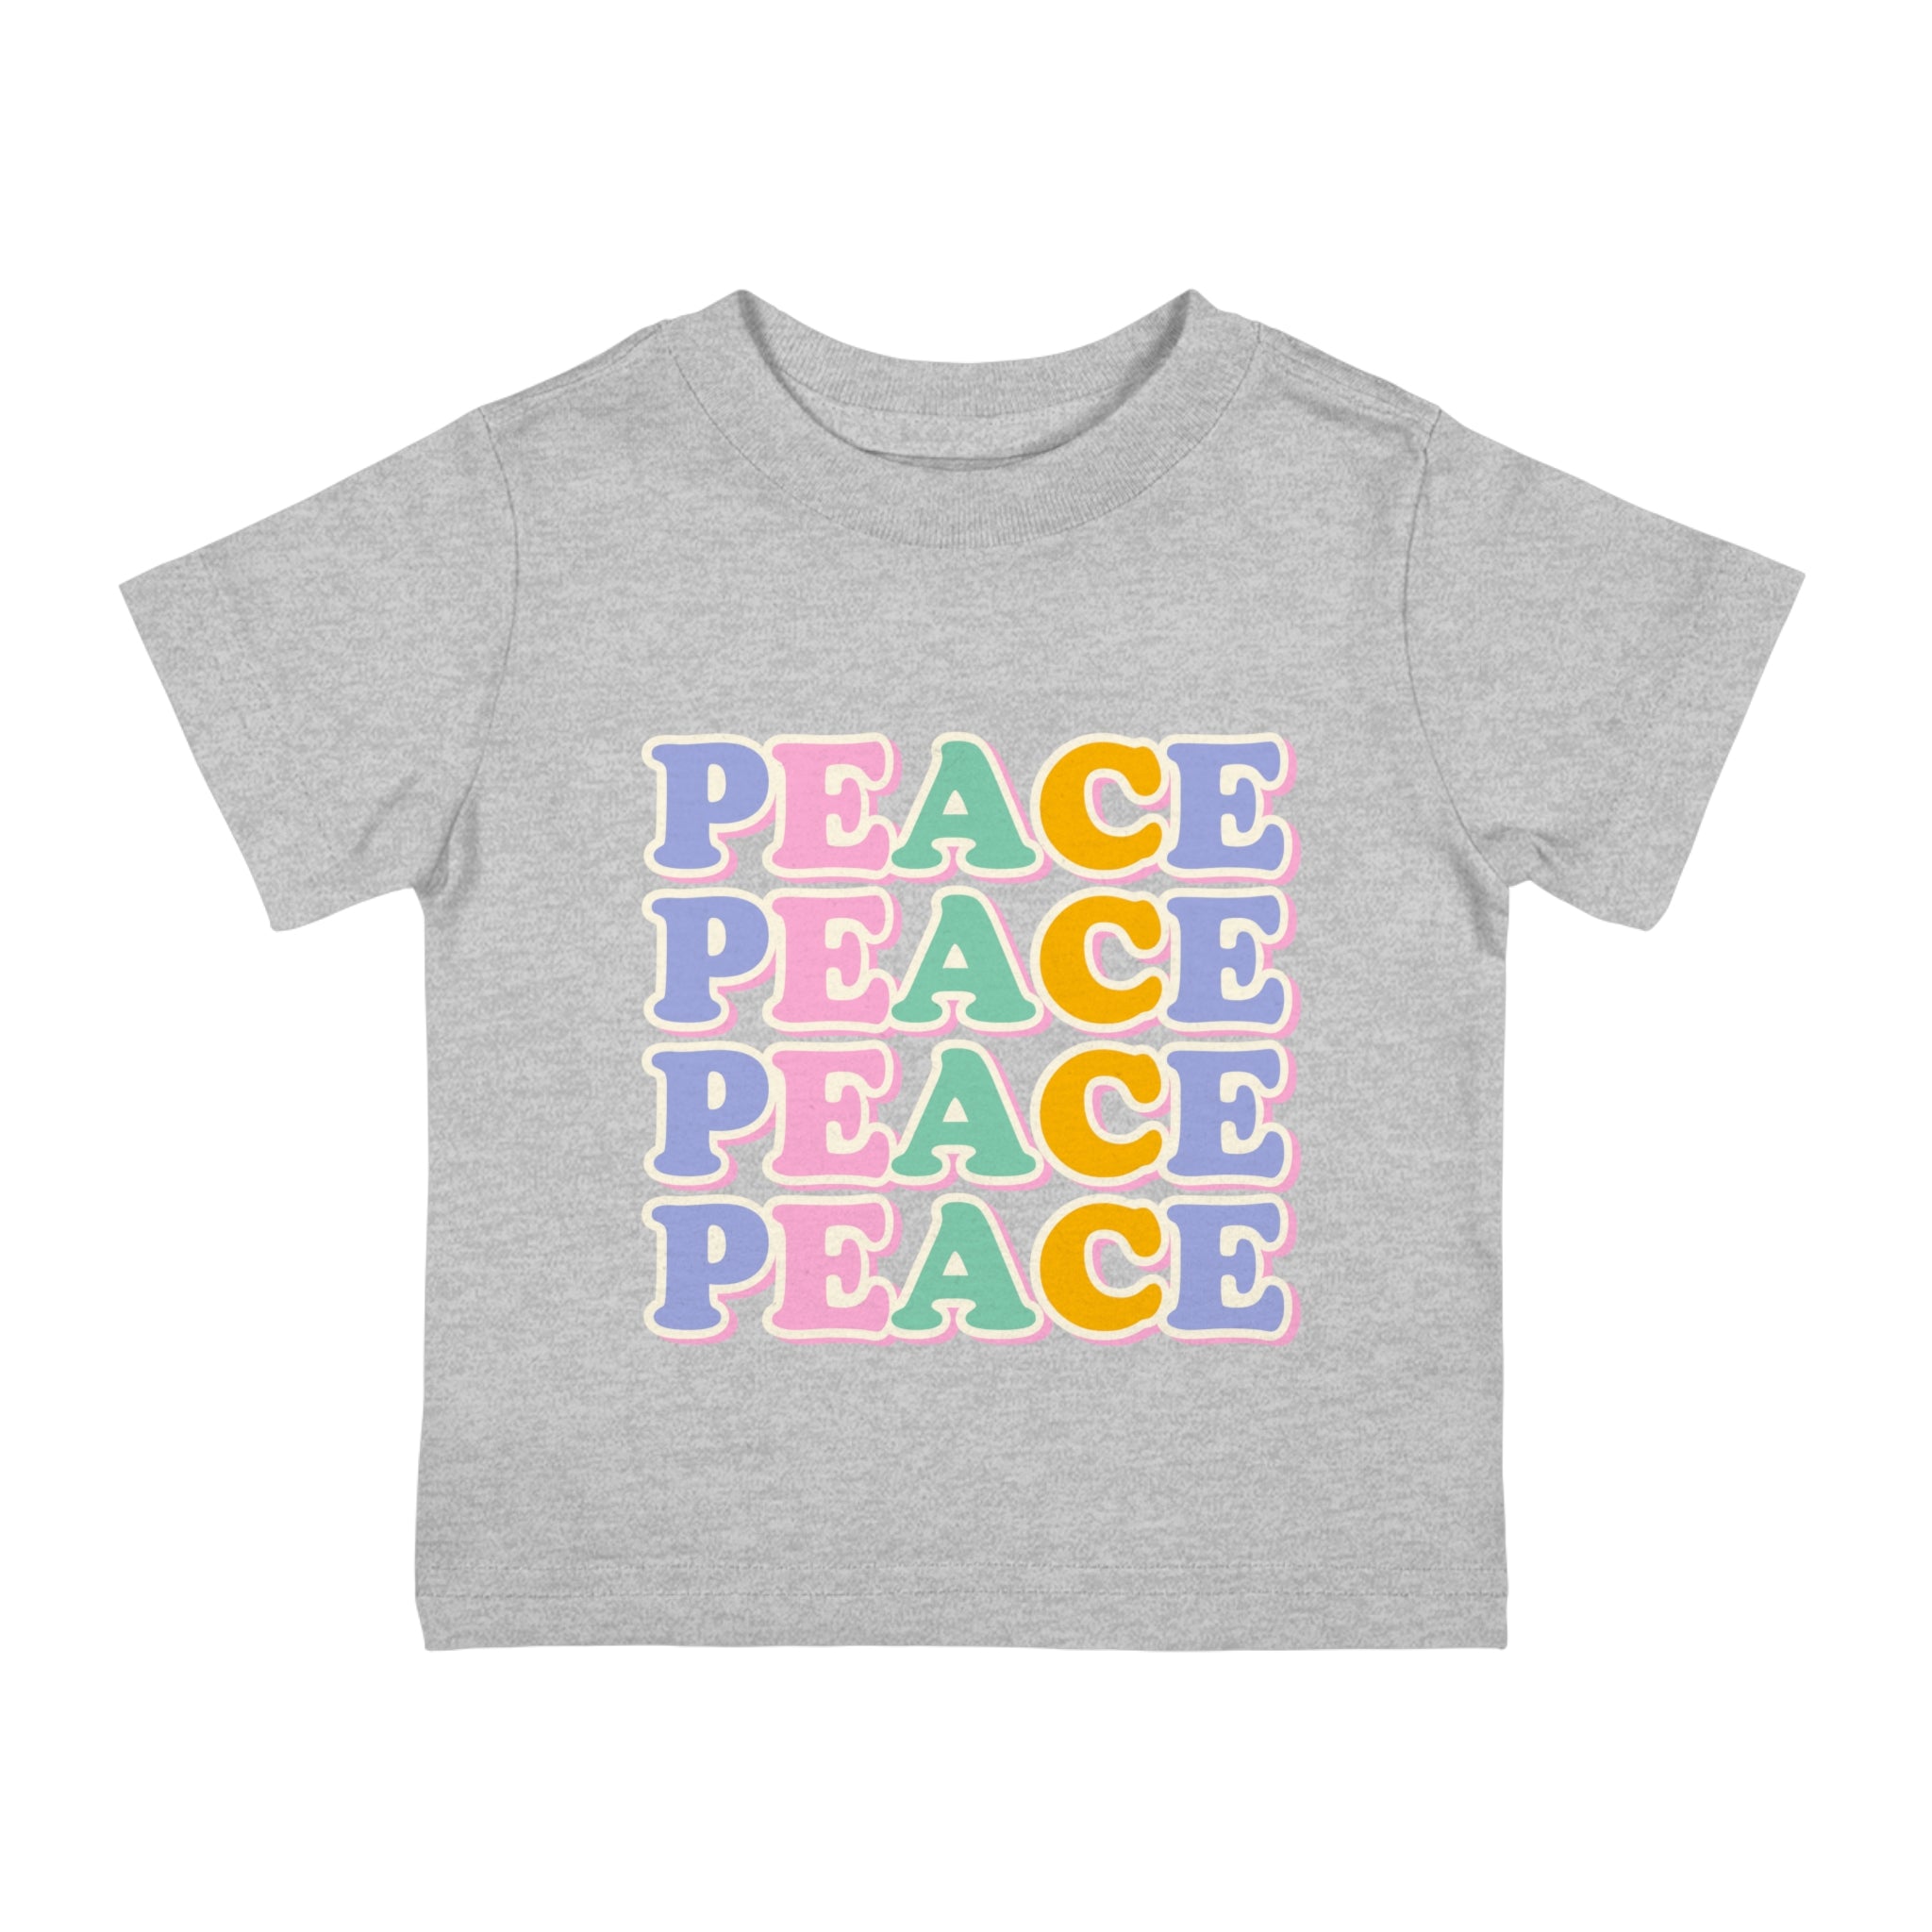 Peace Infant Shirt, Baby Tee, Infant Tee